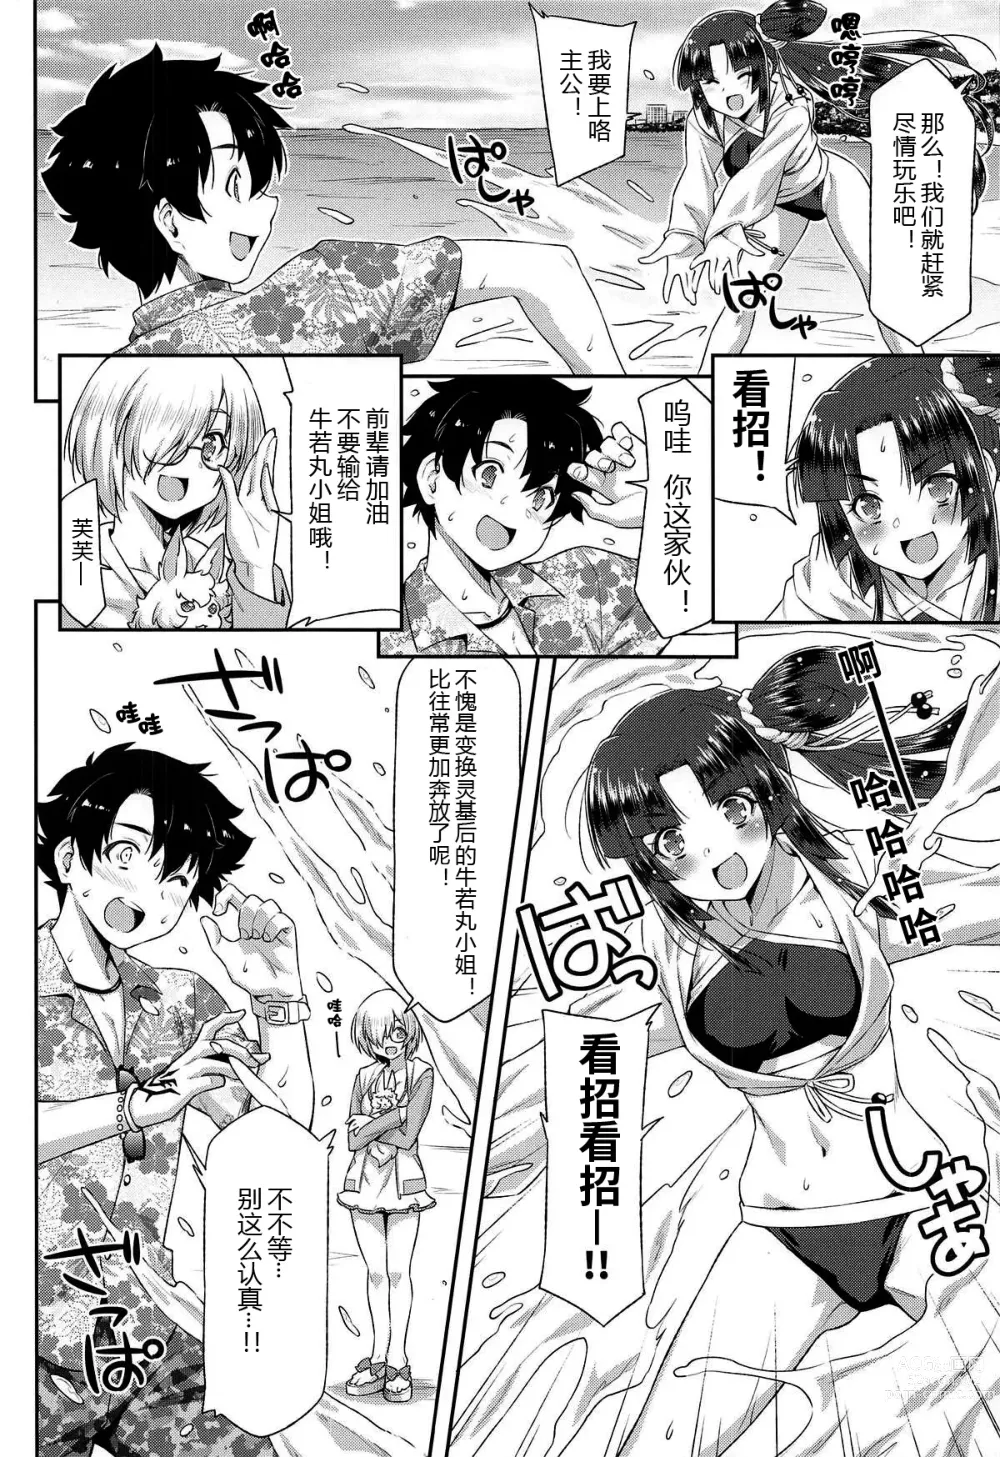 Page 6 of doujinshi Ushiwaka to Luluhawa